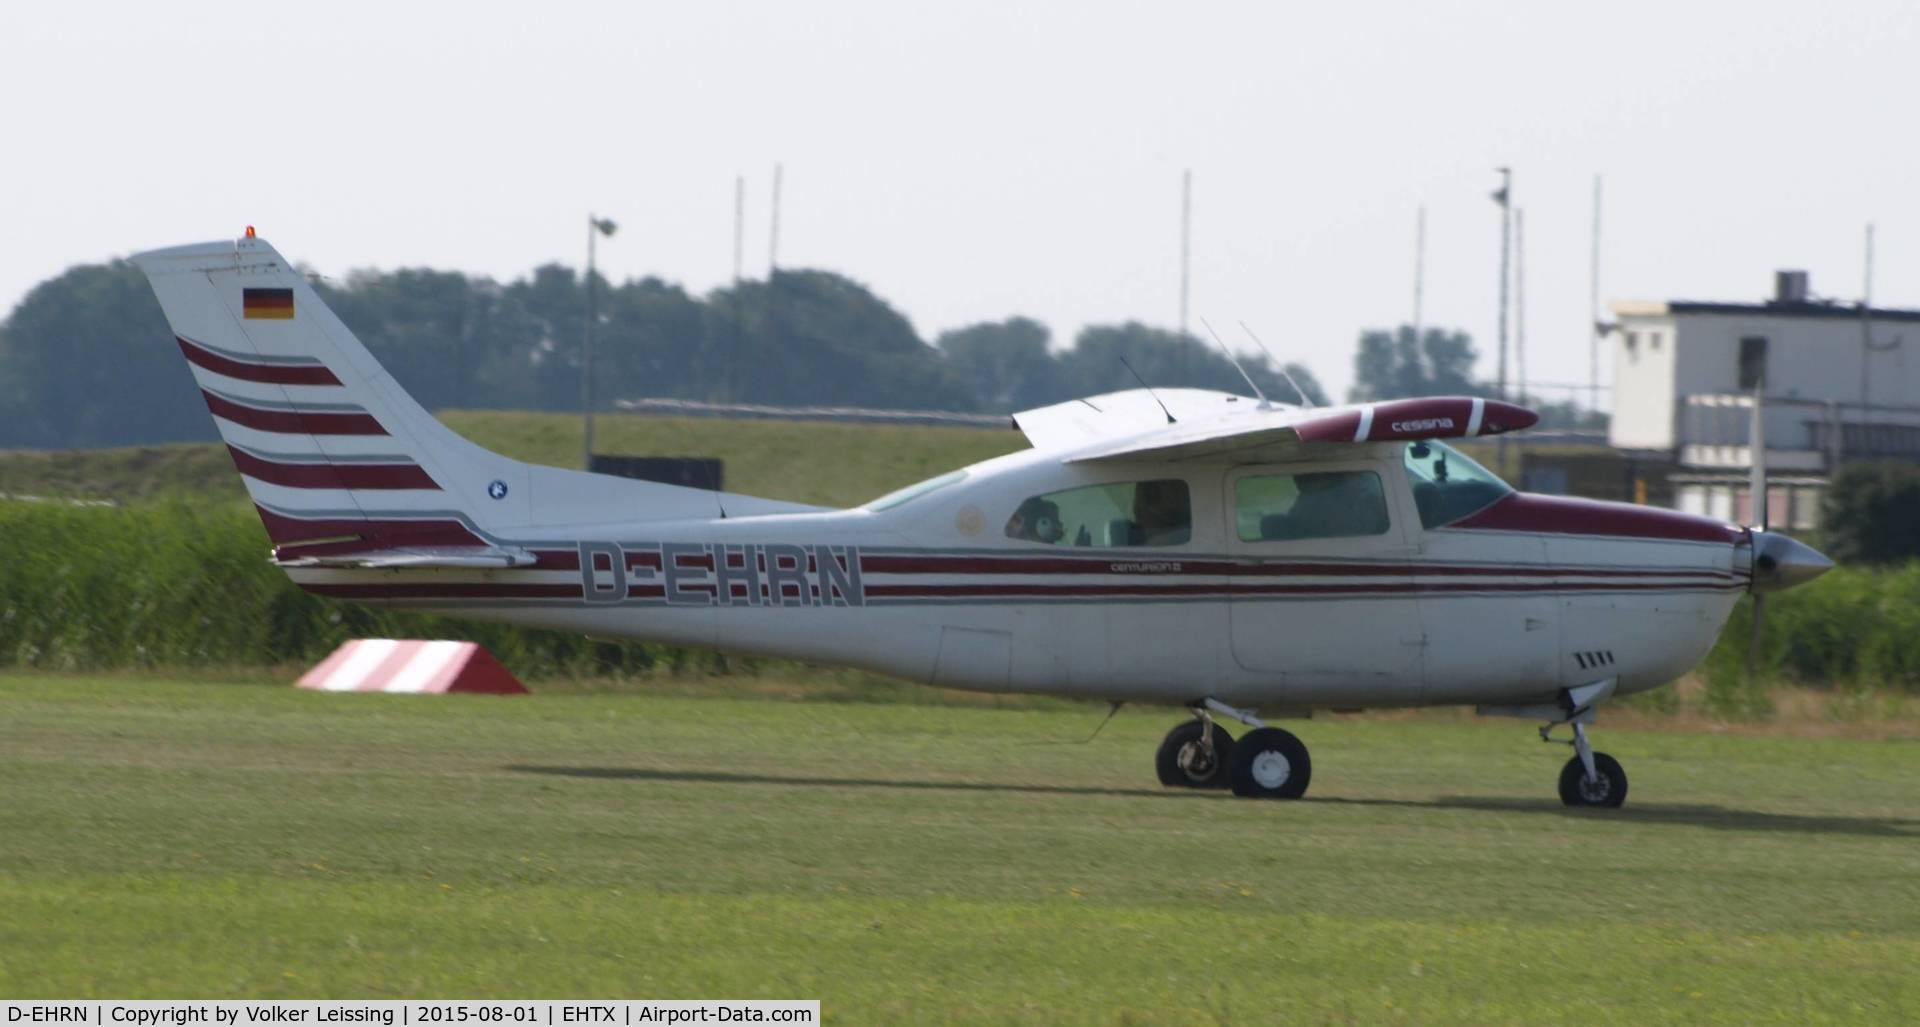 D-EHRN, 1974 Cessna 210L Centurion C/N 2100326, landing